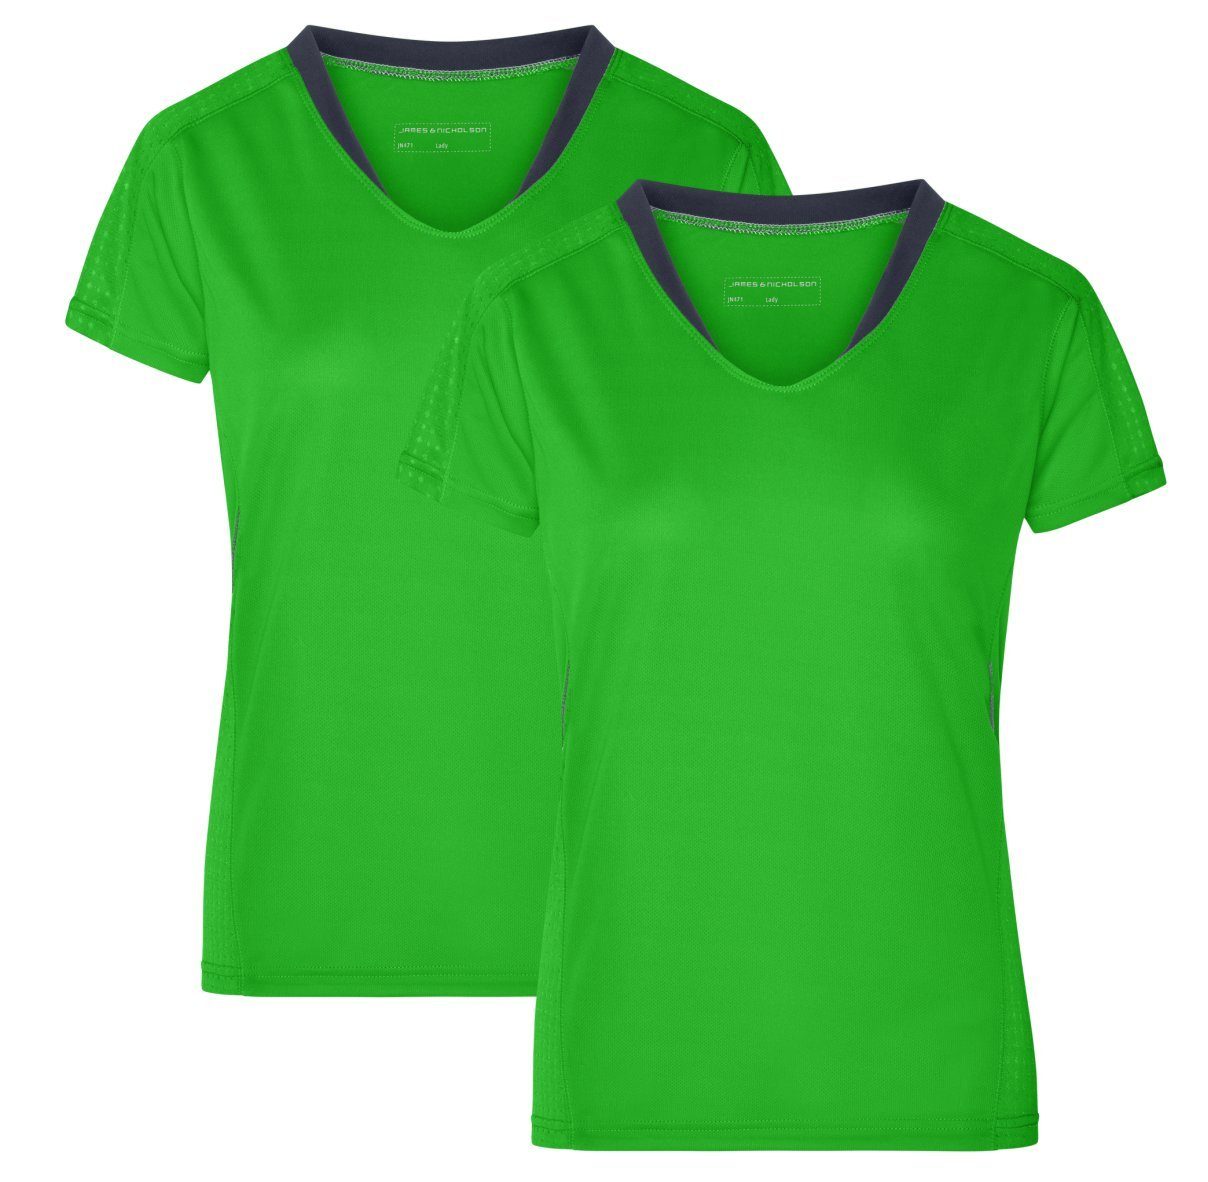 & 2 Nicholson Laufshirt Doppelpack (Doppelpack, Damen Atmungsaktiv Kurzarm Laufshirt Stück) Feuchtigkeitsregulierend T-Shirt green/iron-grey Running und JN471 James